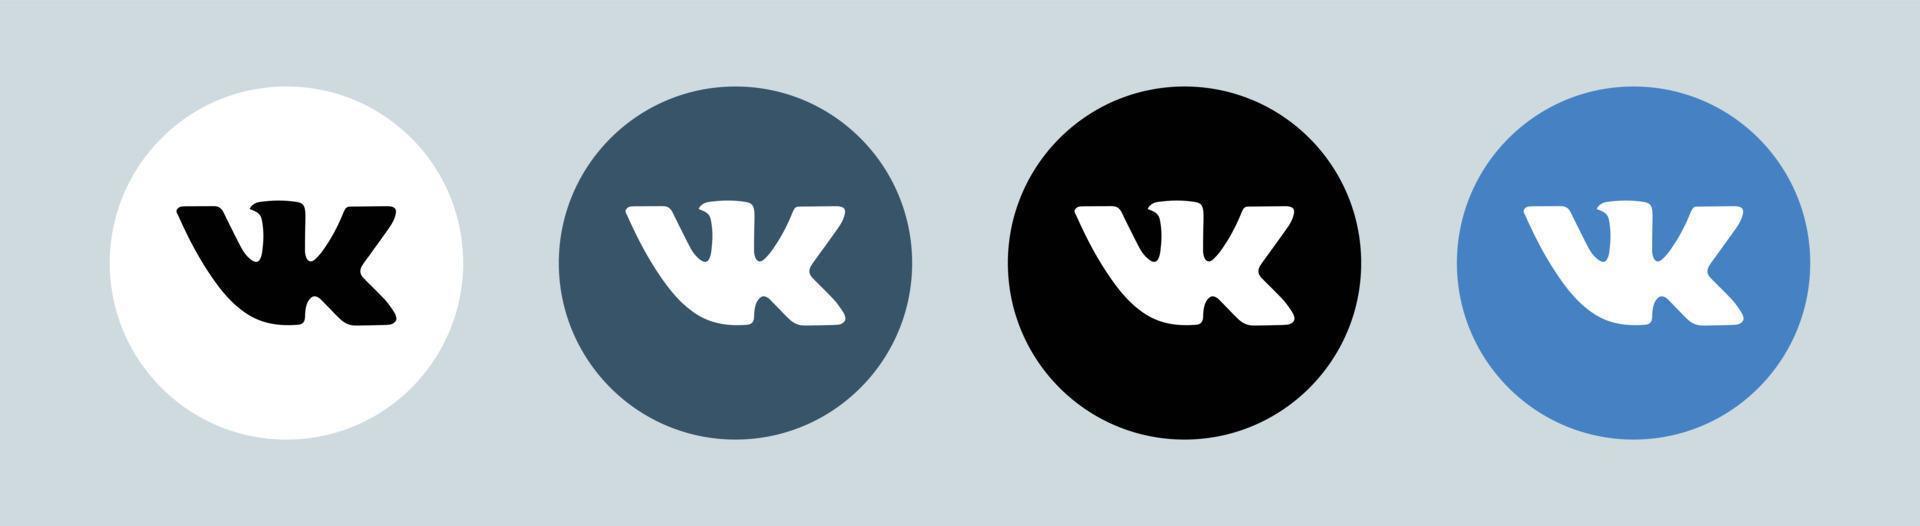 v kontakte-Logo im Kreis. beliebte Logotyp-Vektorillustration des sozialen Netzwerks. vektor